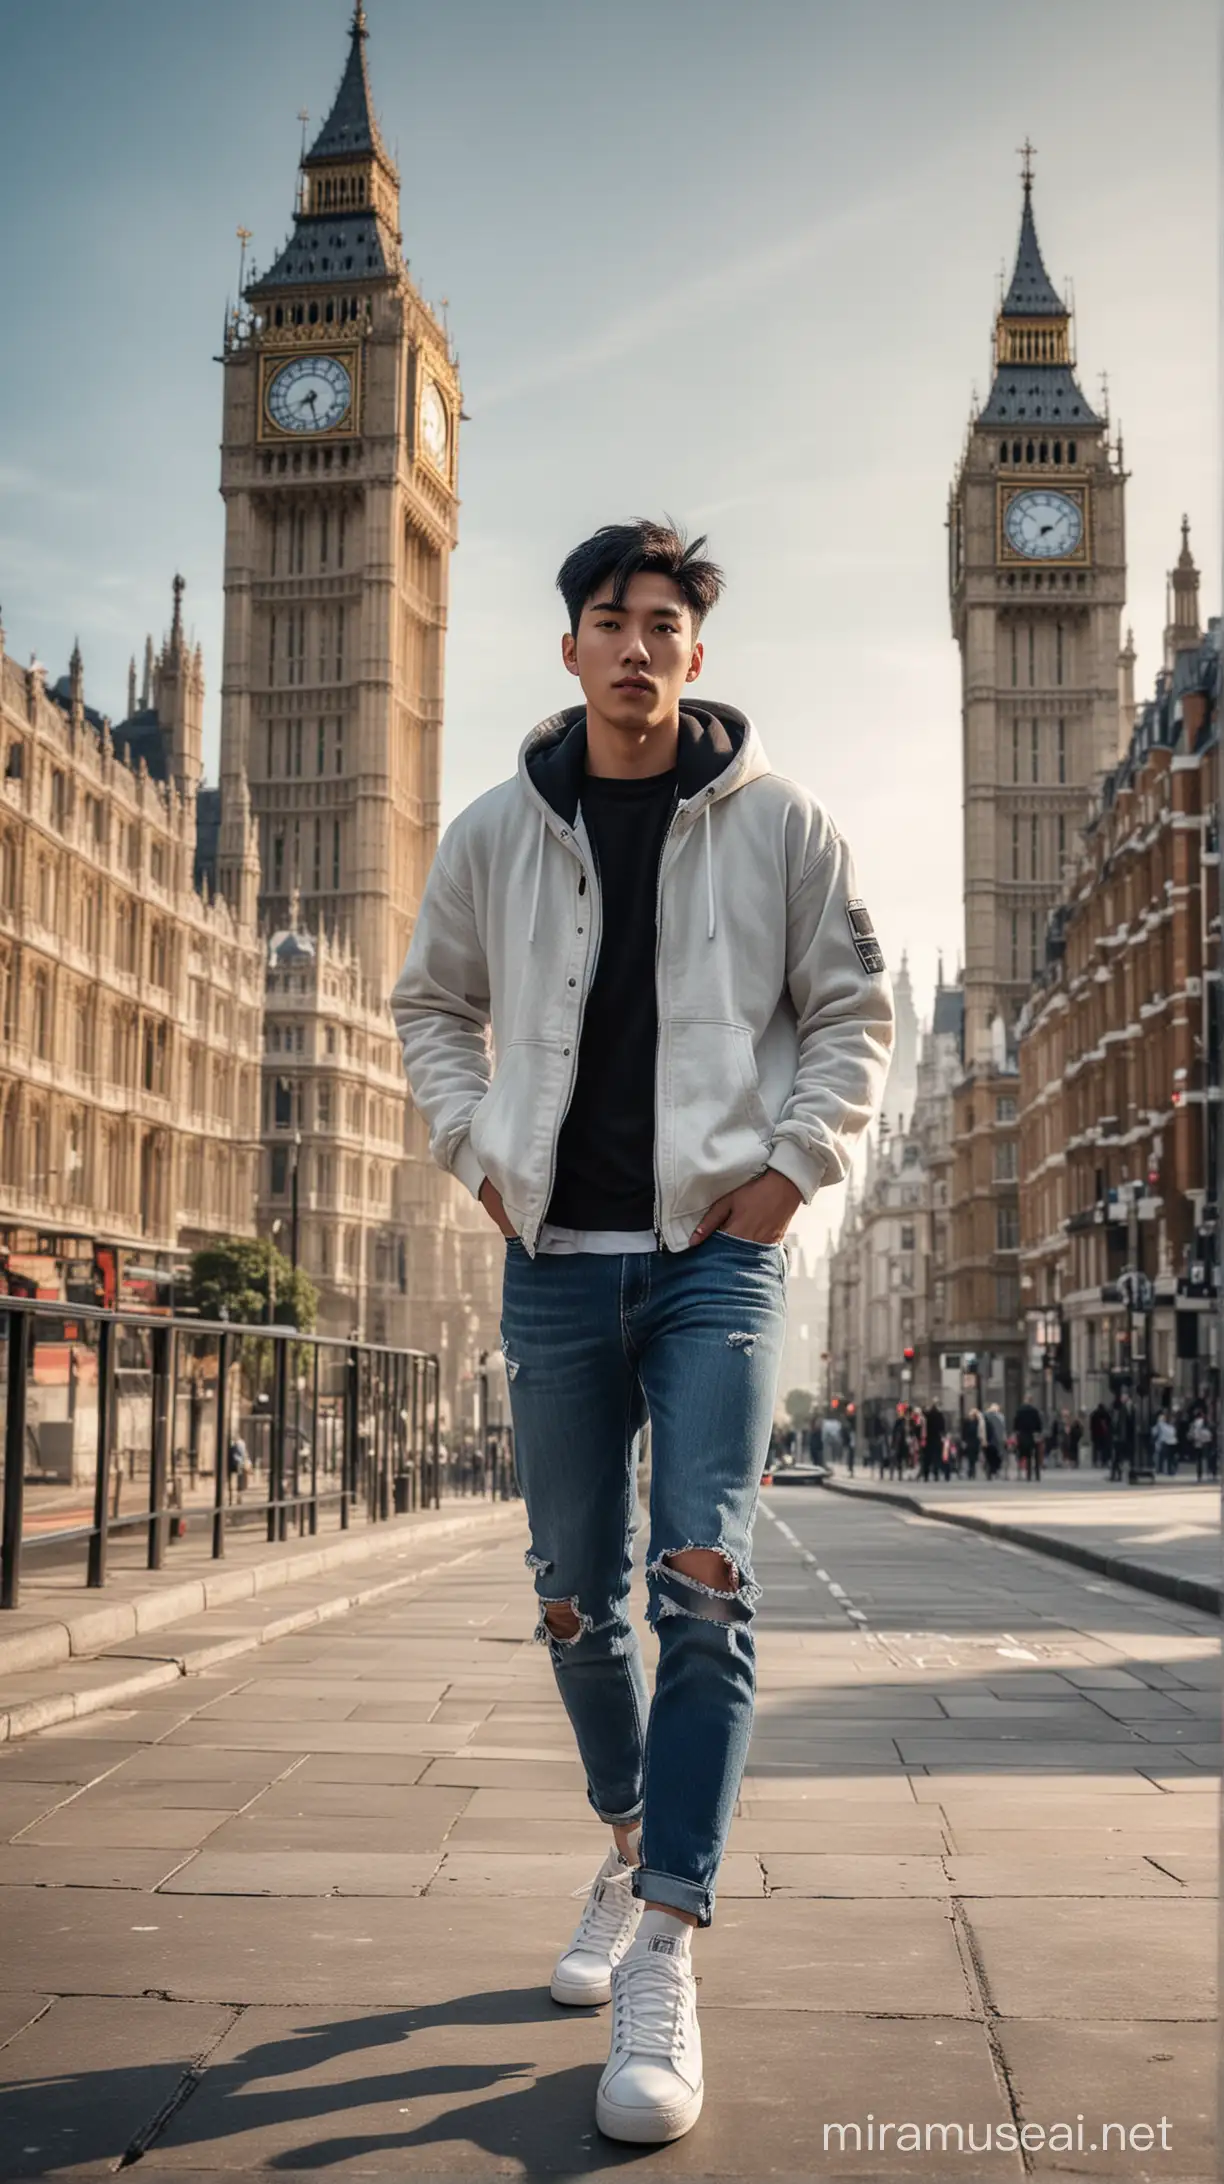 Stylish Korean Man Poses Amidst Londons Morning Glow at Big Ben